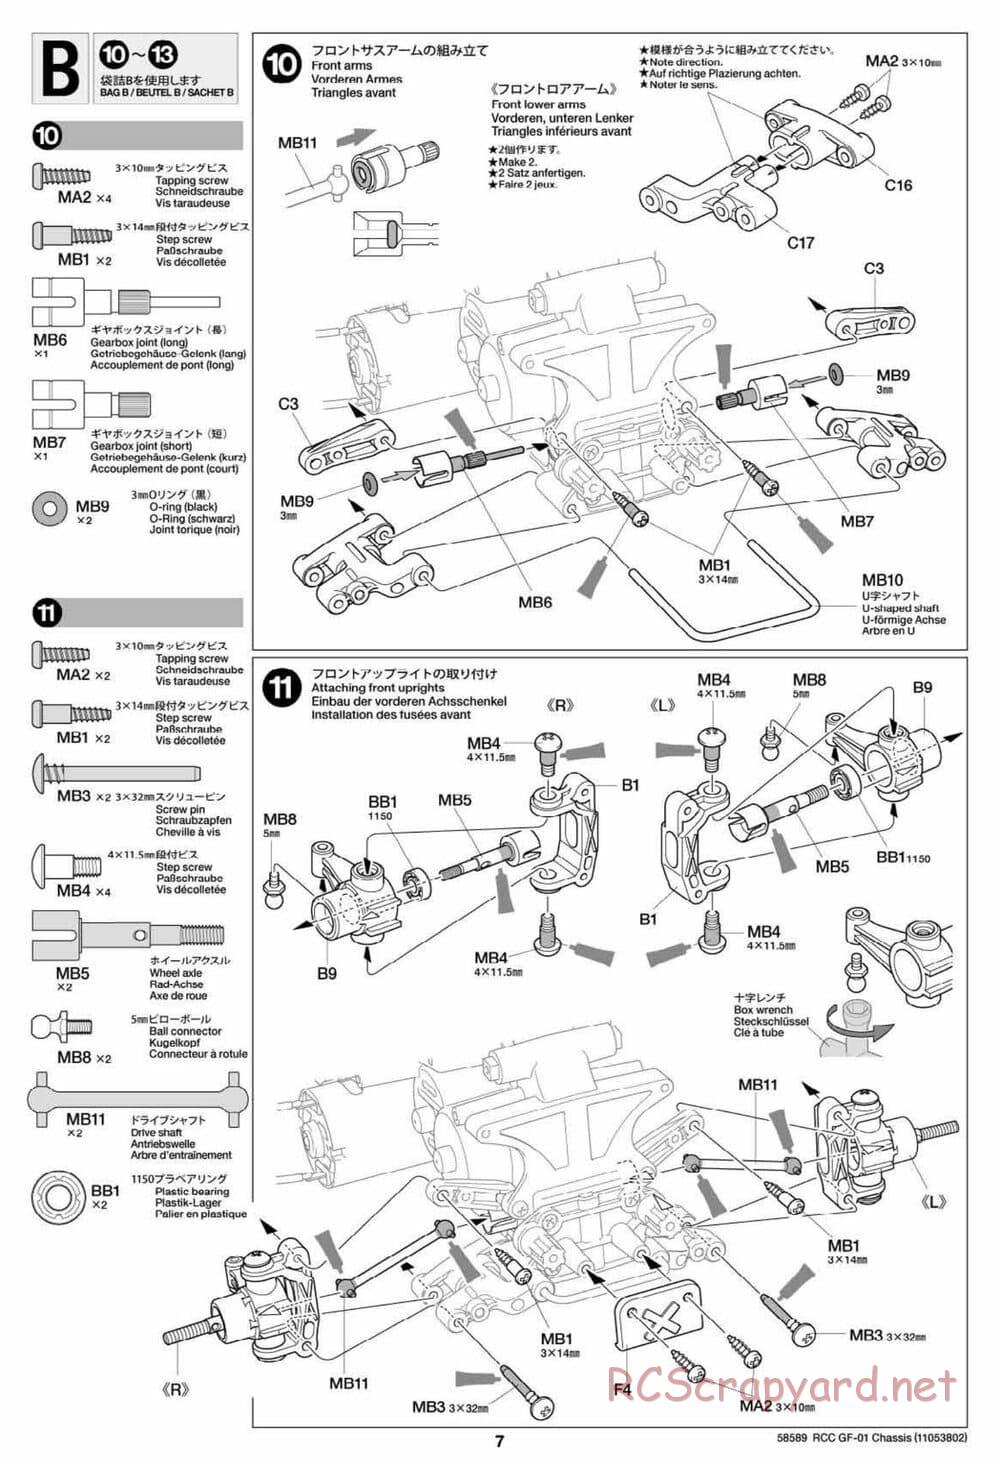 Tamiya - GF-01 Chassis - Manual • RCScrapyard - Radio Controlled Model ...